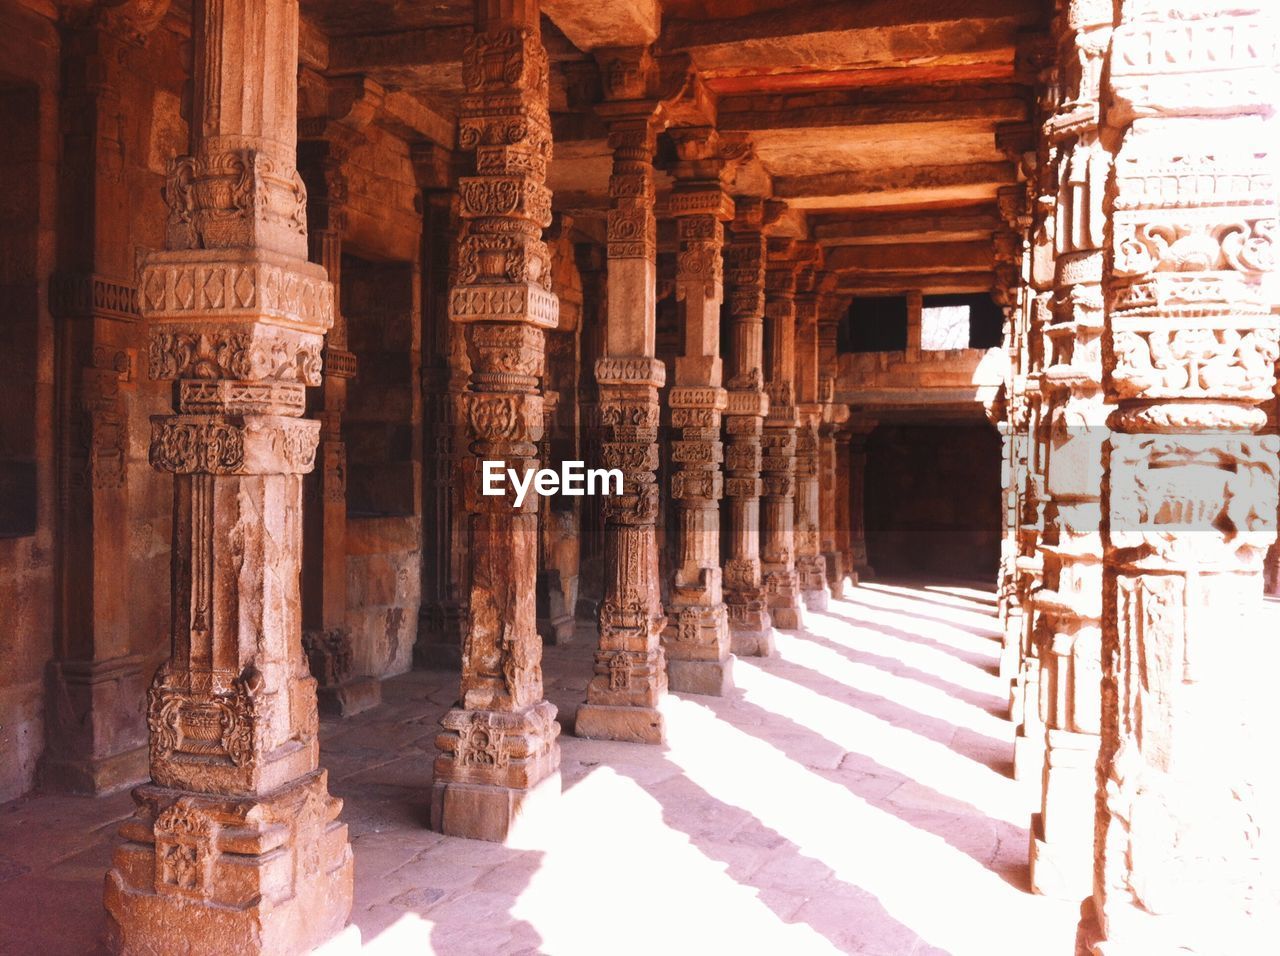 Architectural columns of historic temple